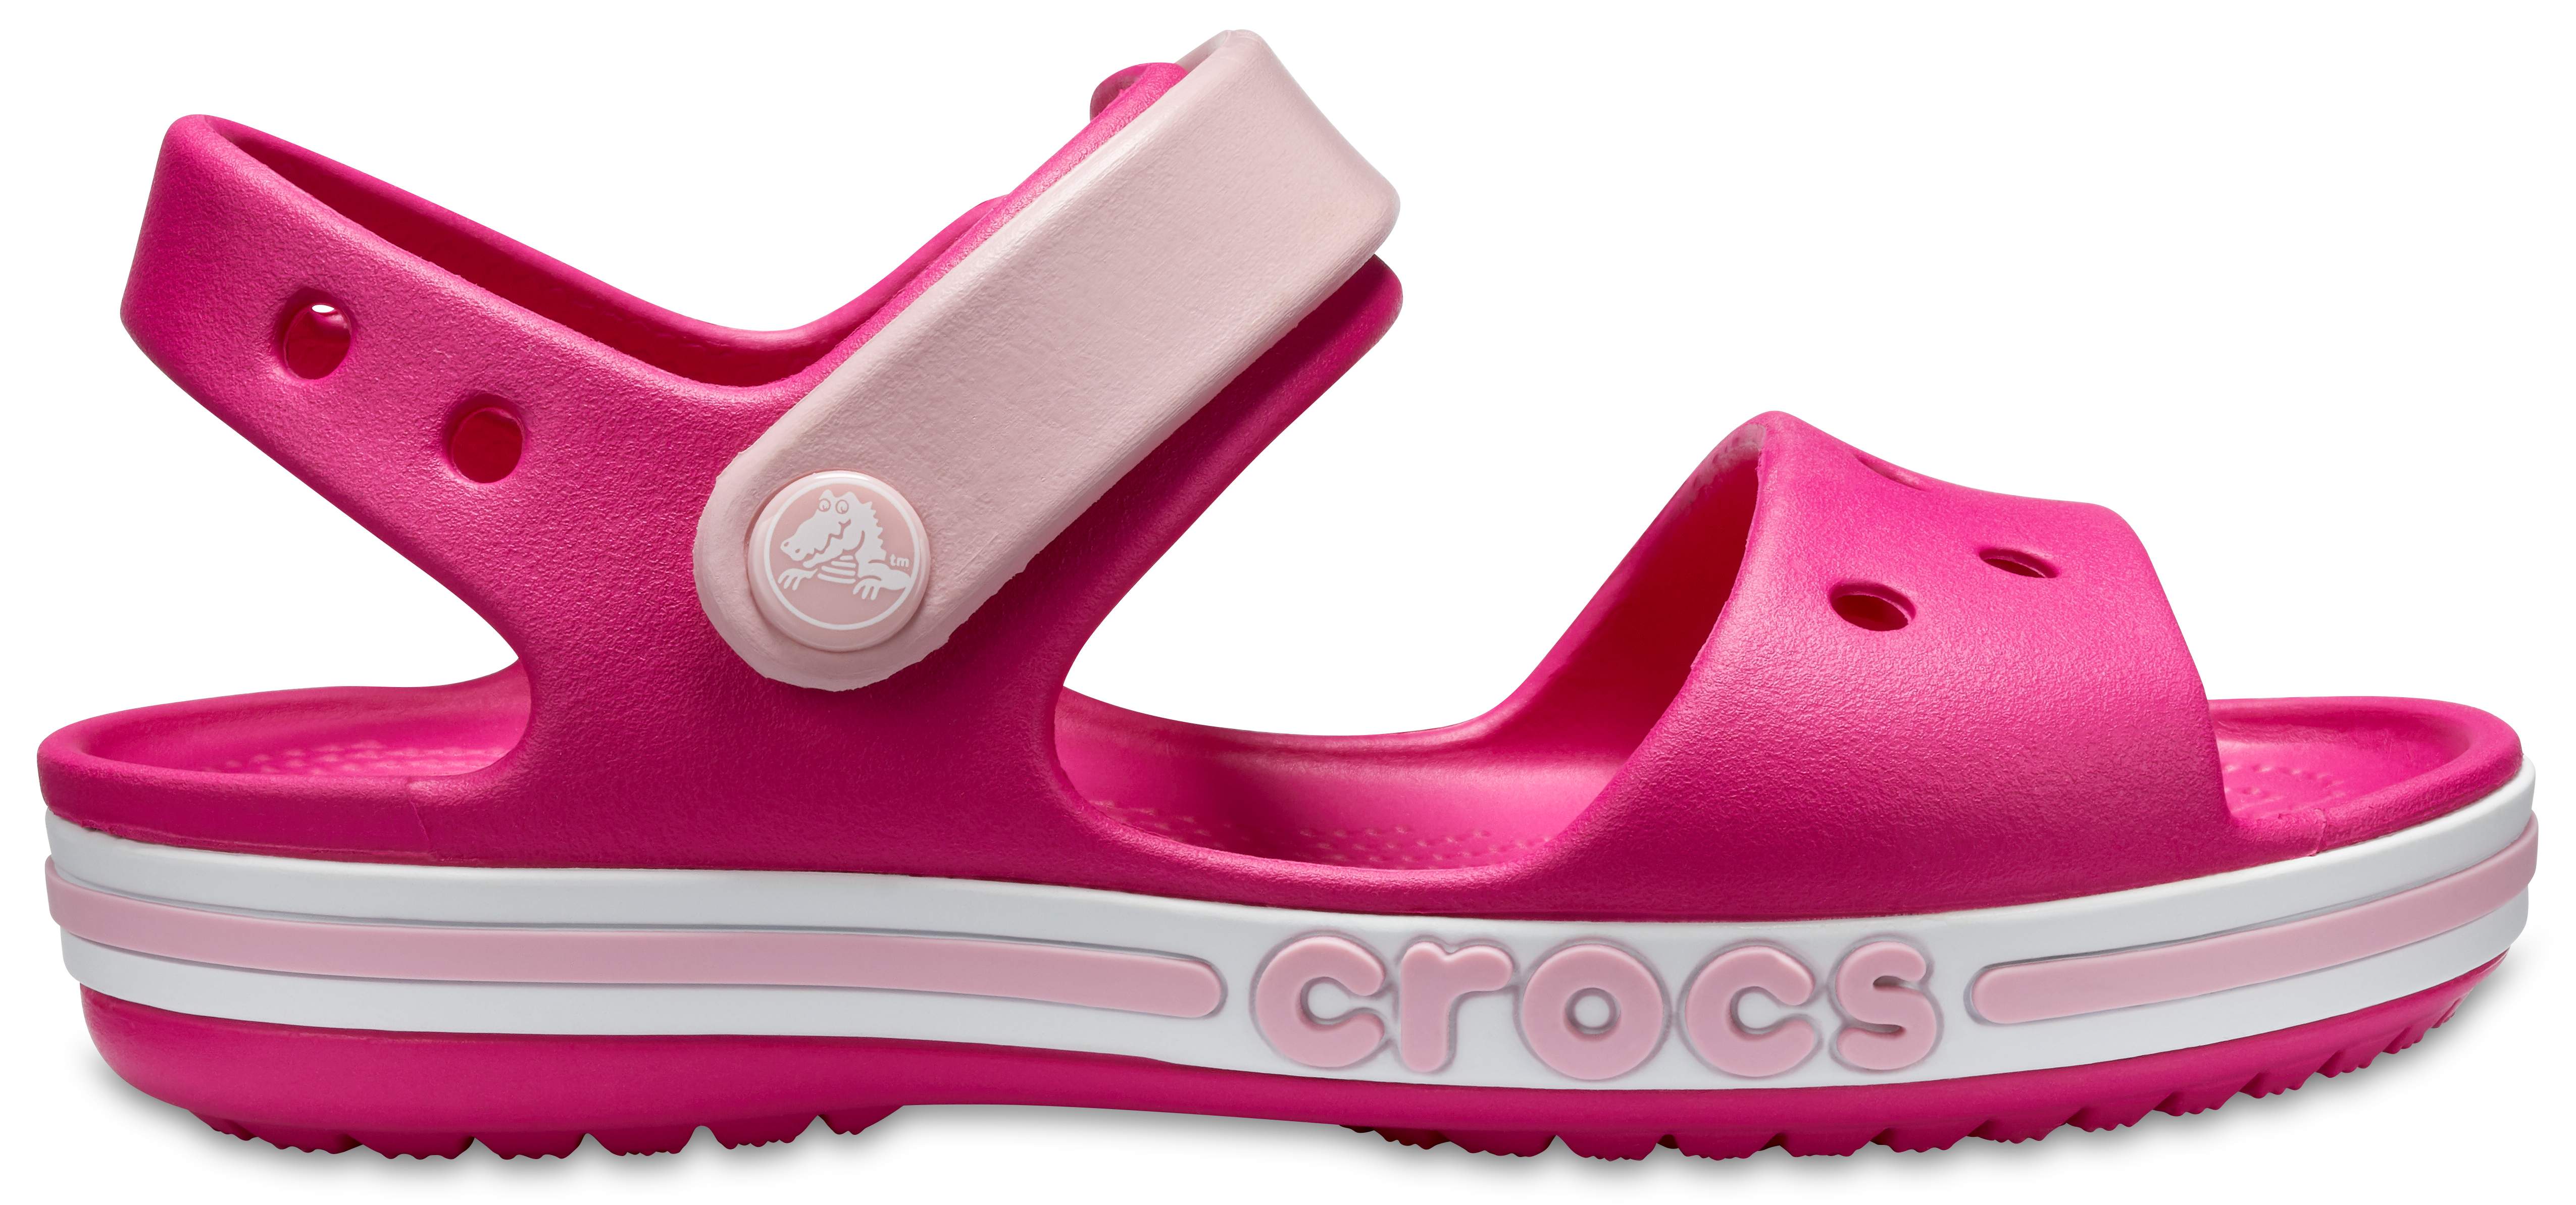 crocs sandals for kids